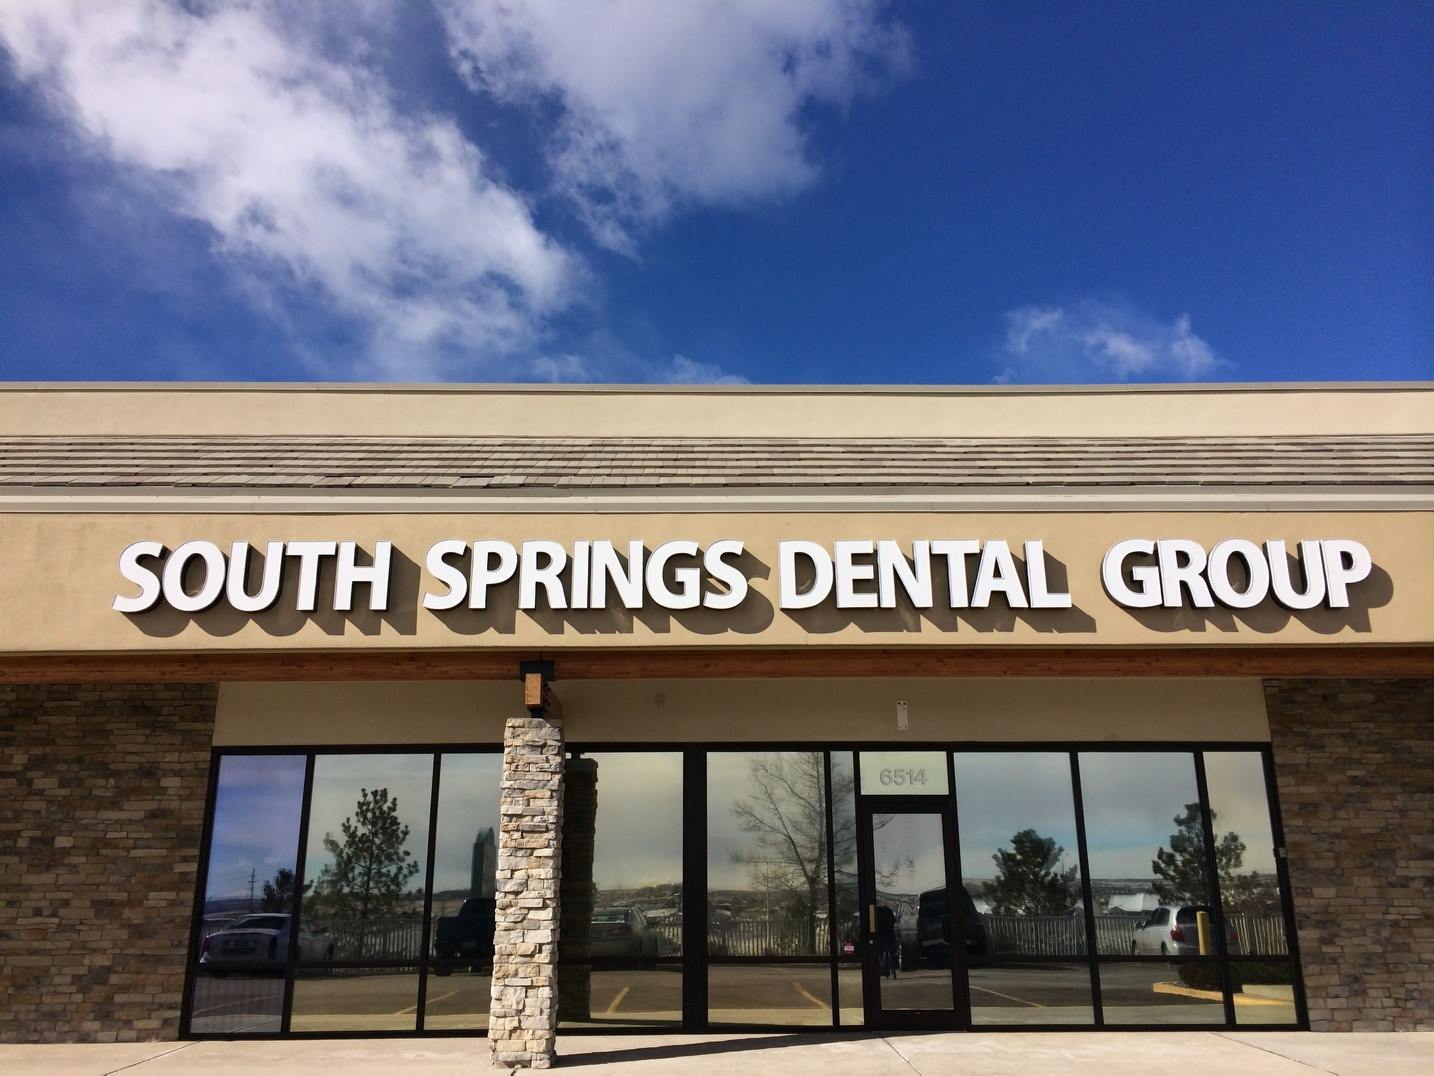 South Springs Dental Group Colorado Springs, CO 80906